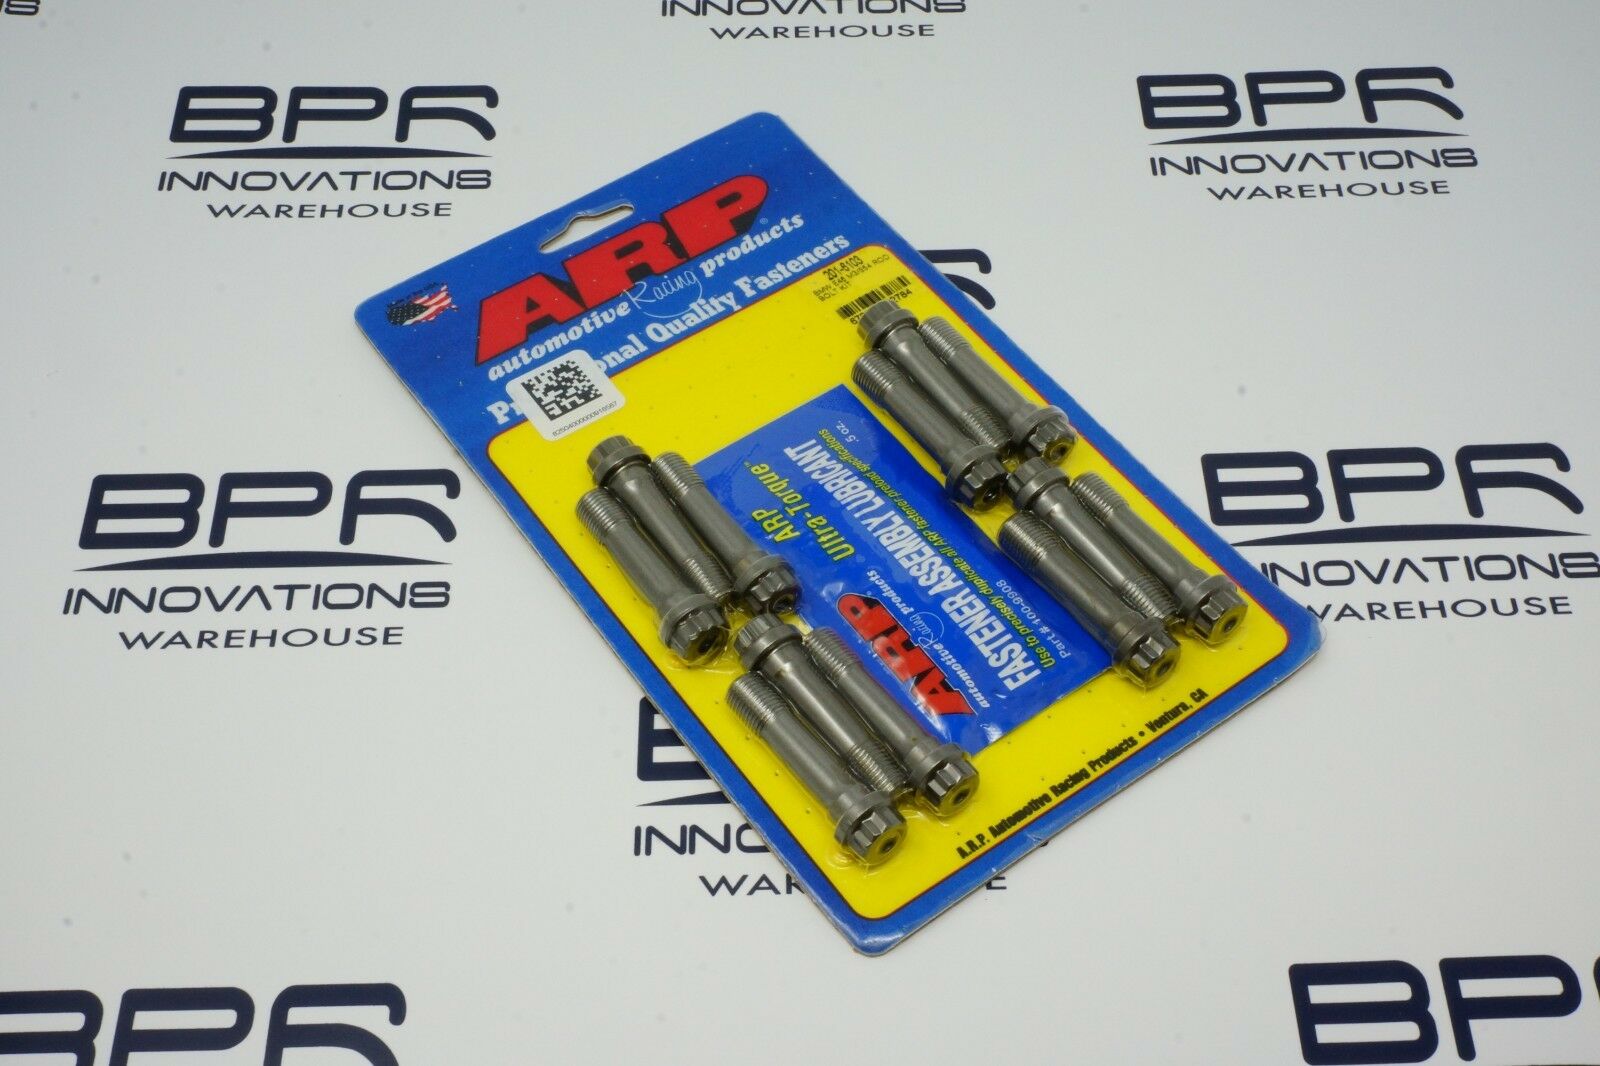 ARP Rod Bolt Kit For BMW 3.2L (S54) inline 6 M11 47mm UHL - 201-6103